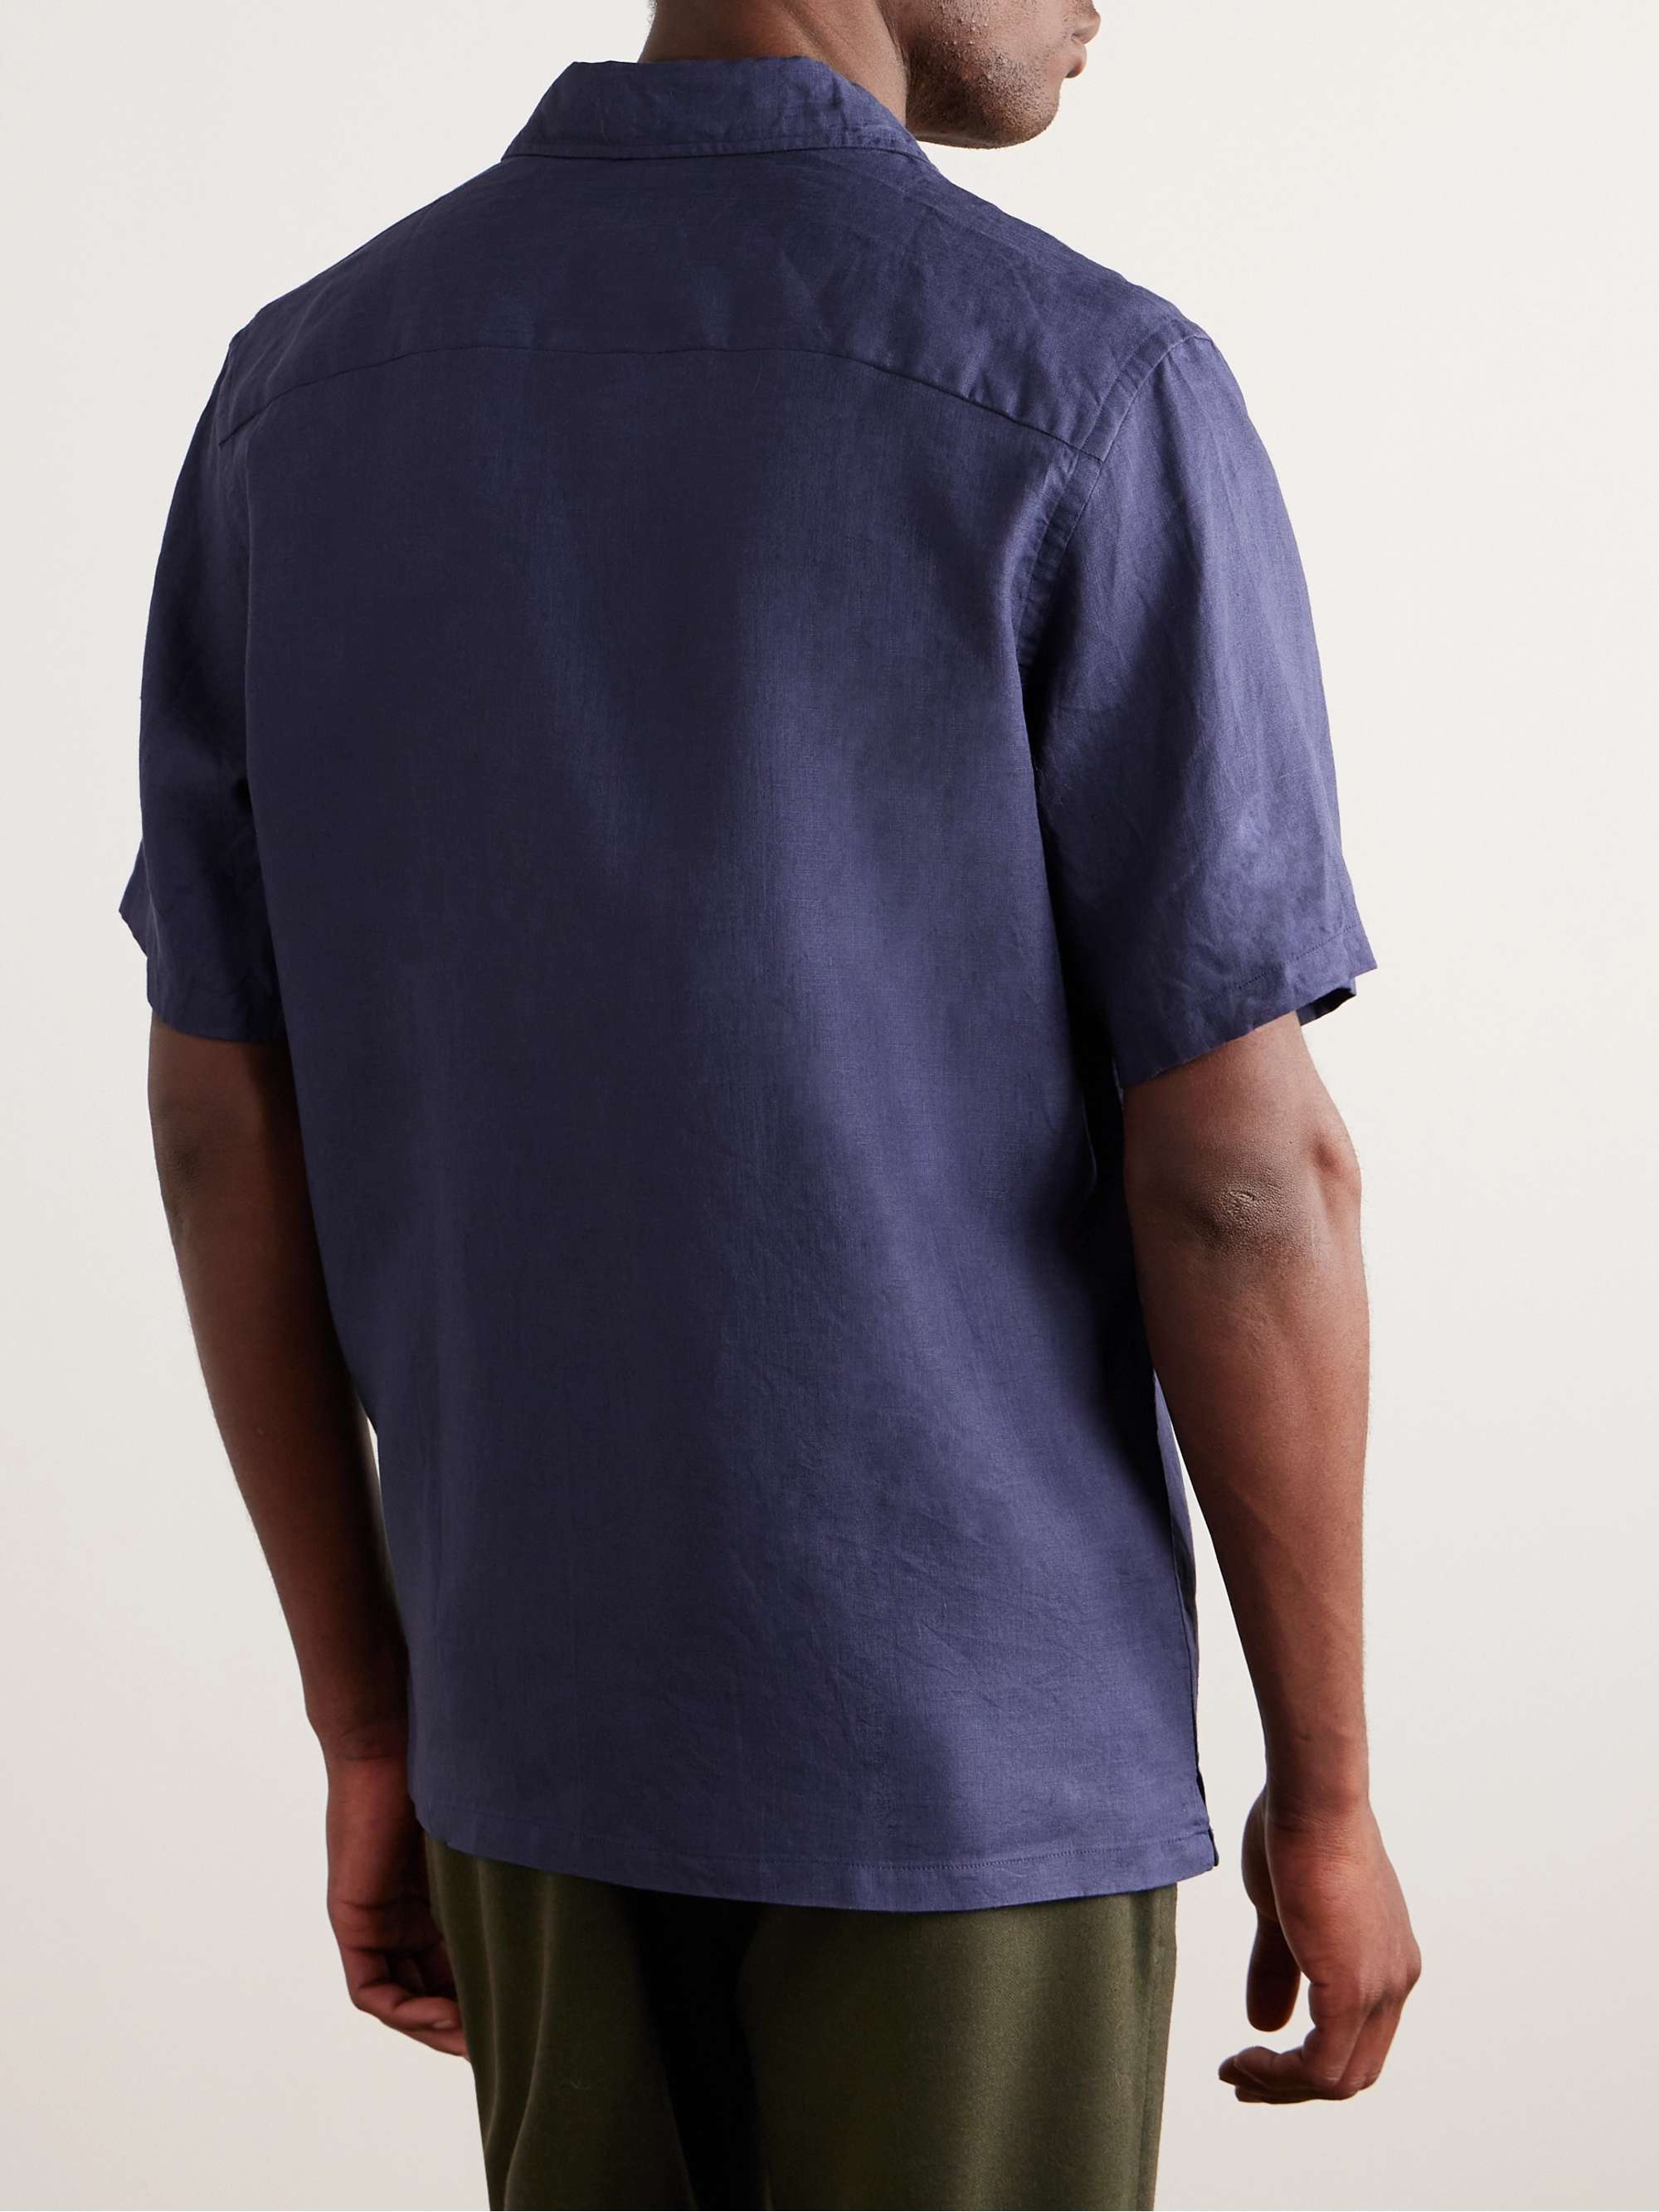 KINGSMAN Camp-Collar Linen Shirt